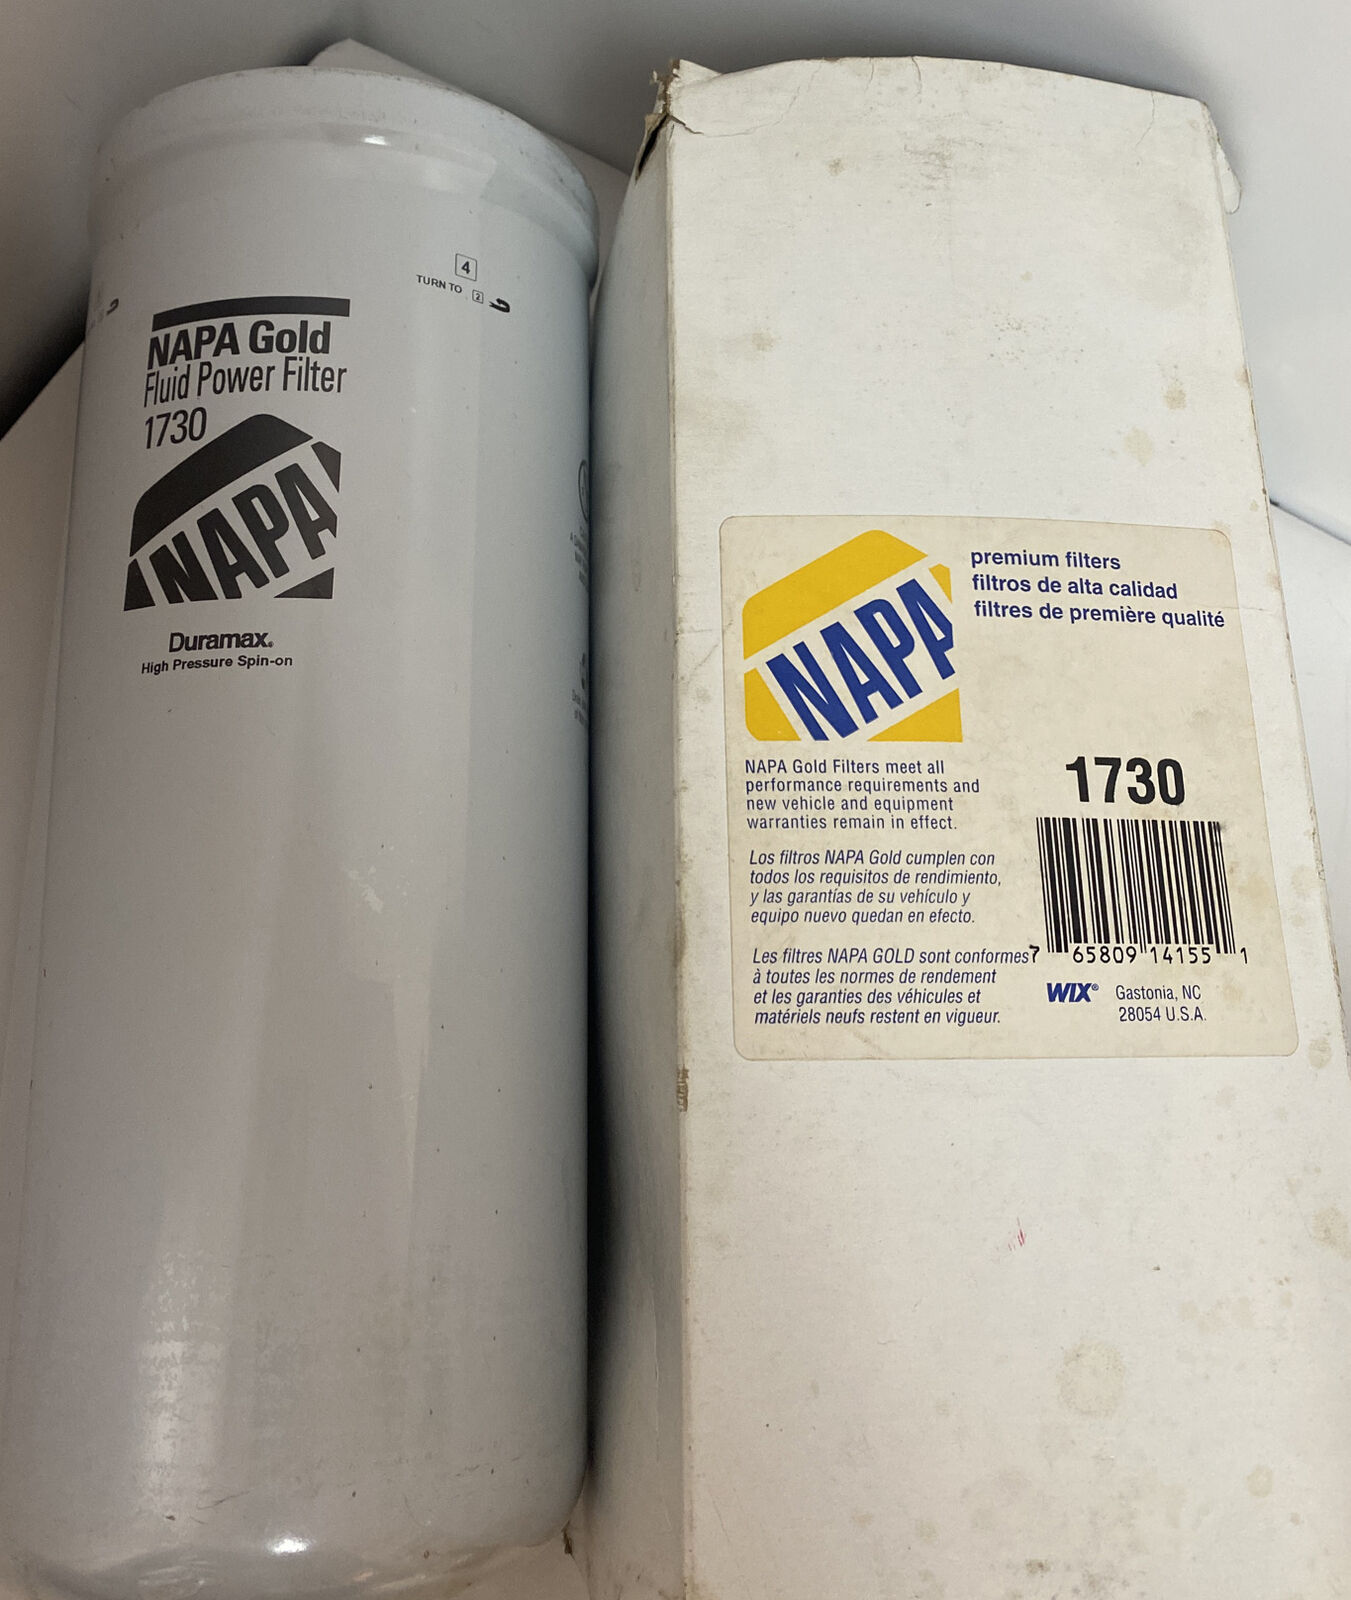 Napa Gold Premium Filters - Fluid Power Filter 1730 Duramax WIX (NEW IN PLASTIC)